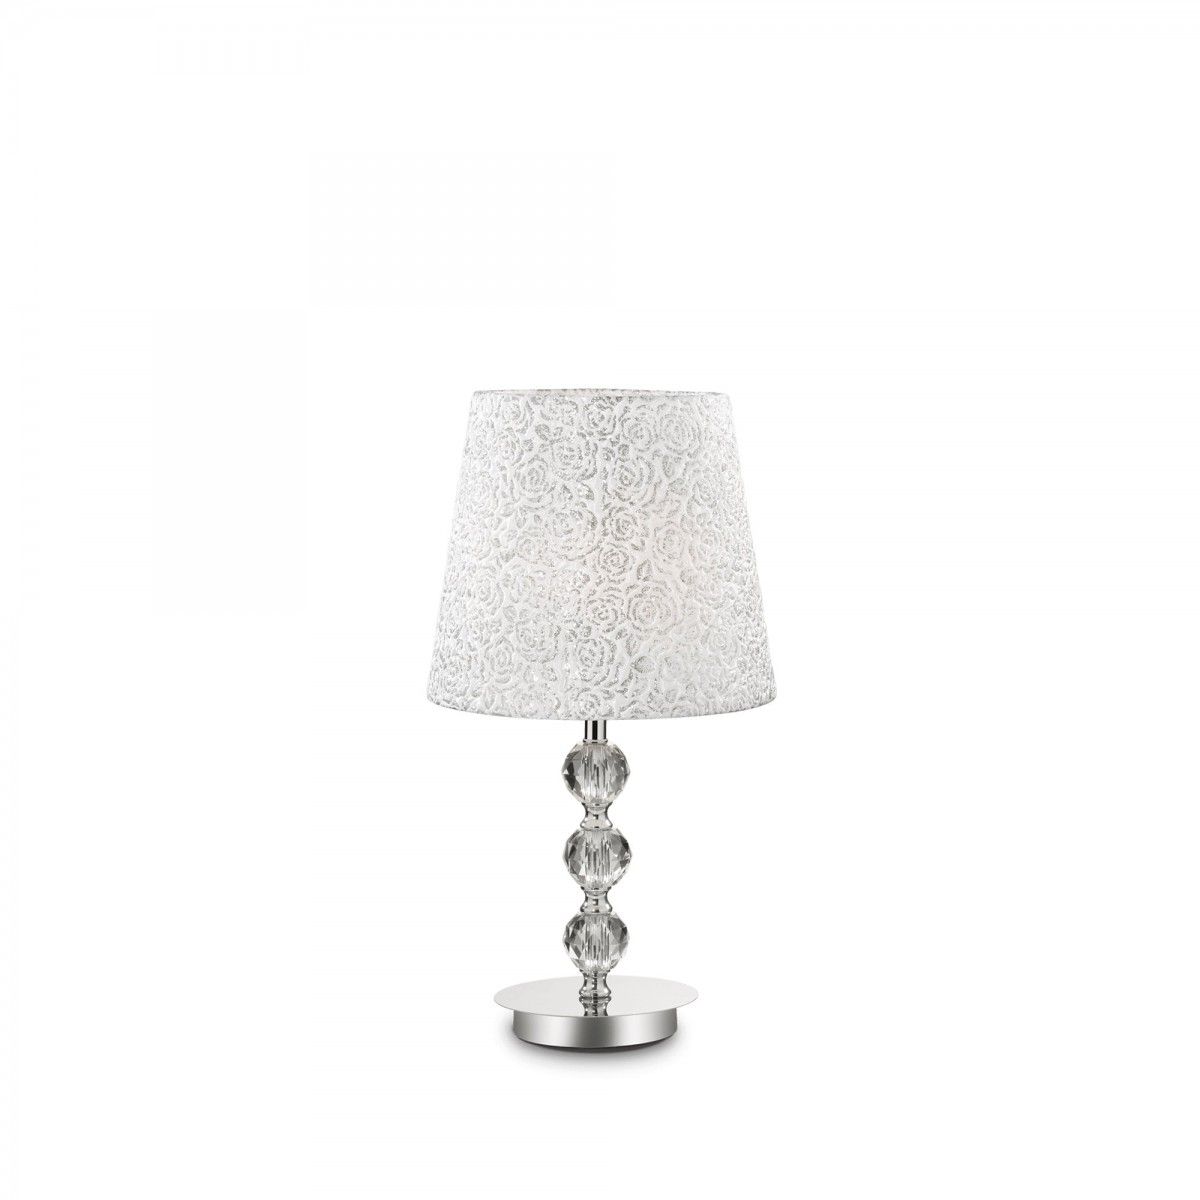 stolná lampa Ideal lux LE 073422 - strieborná